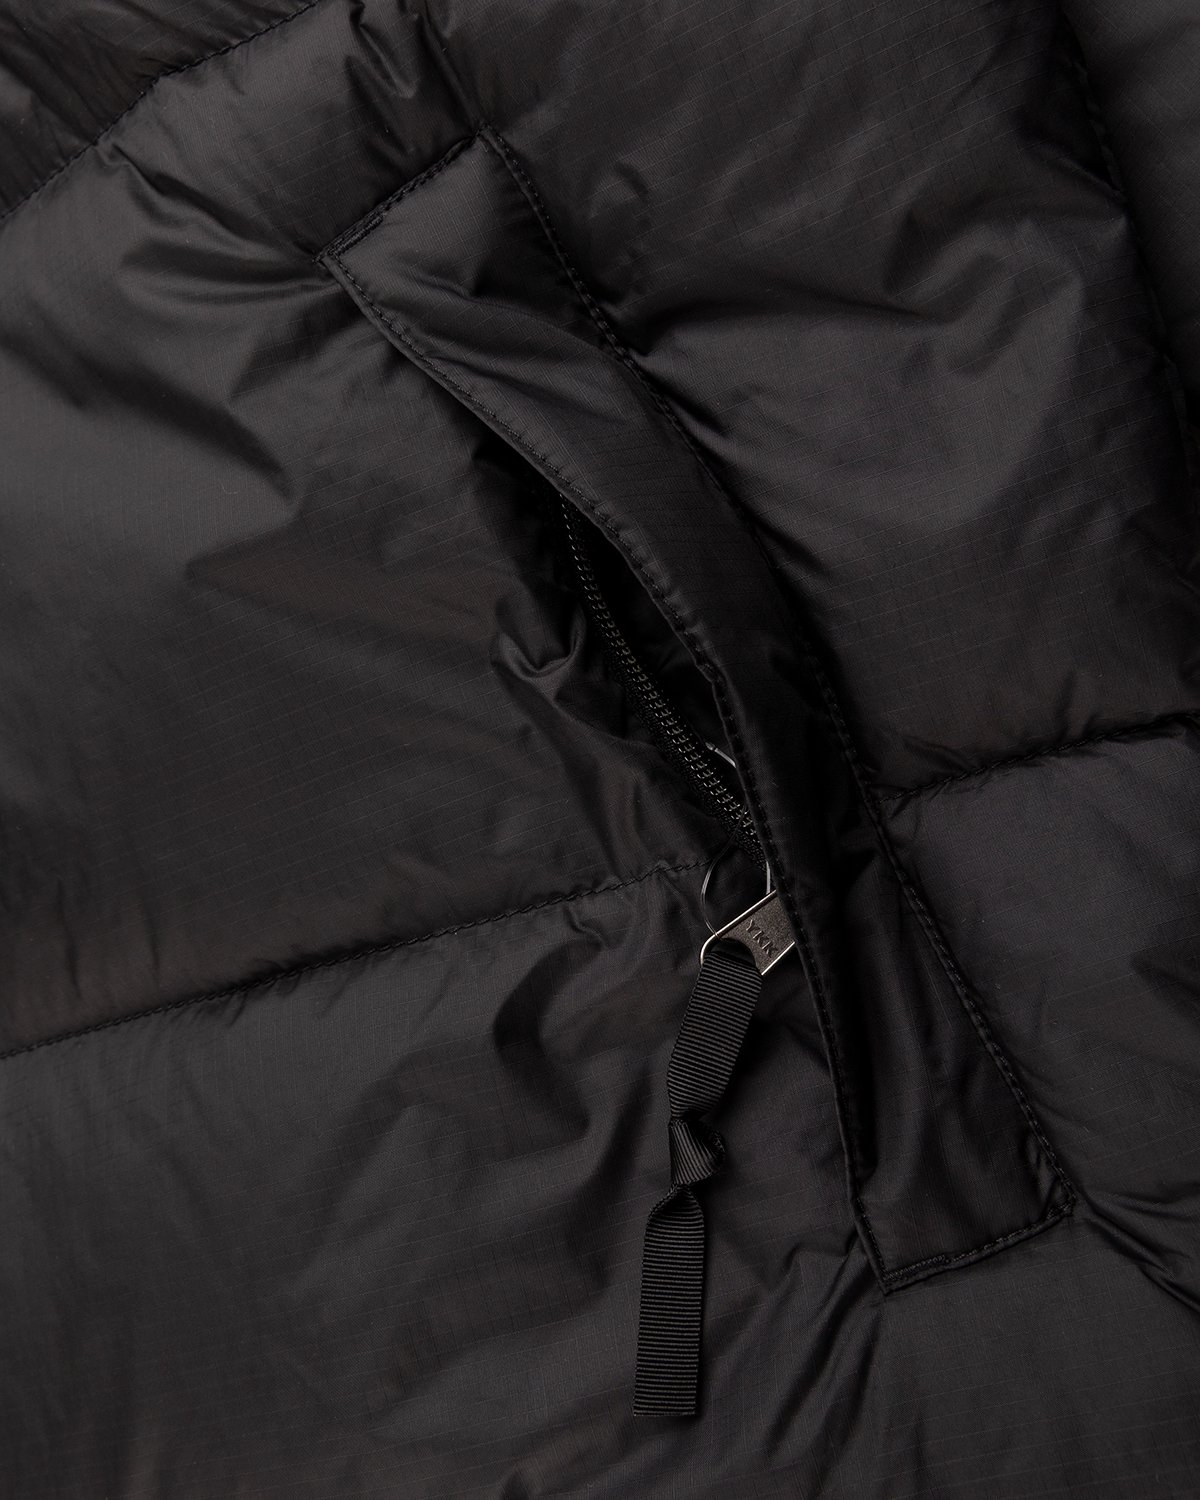 The North Face - 1996 Retro Nuptse Jacket Black - Clothing - Black - Image 6